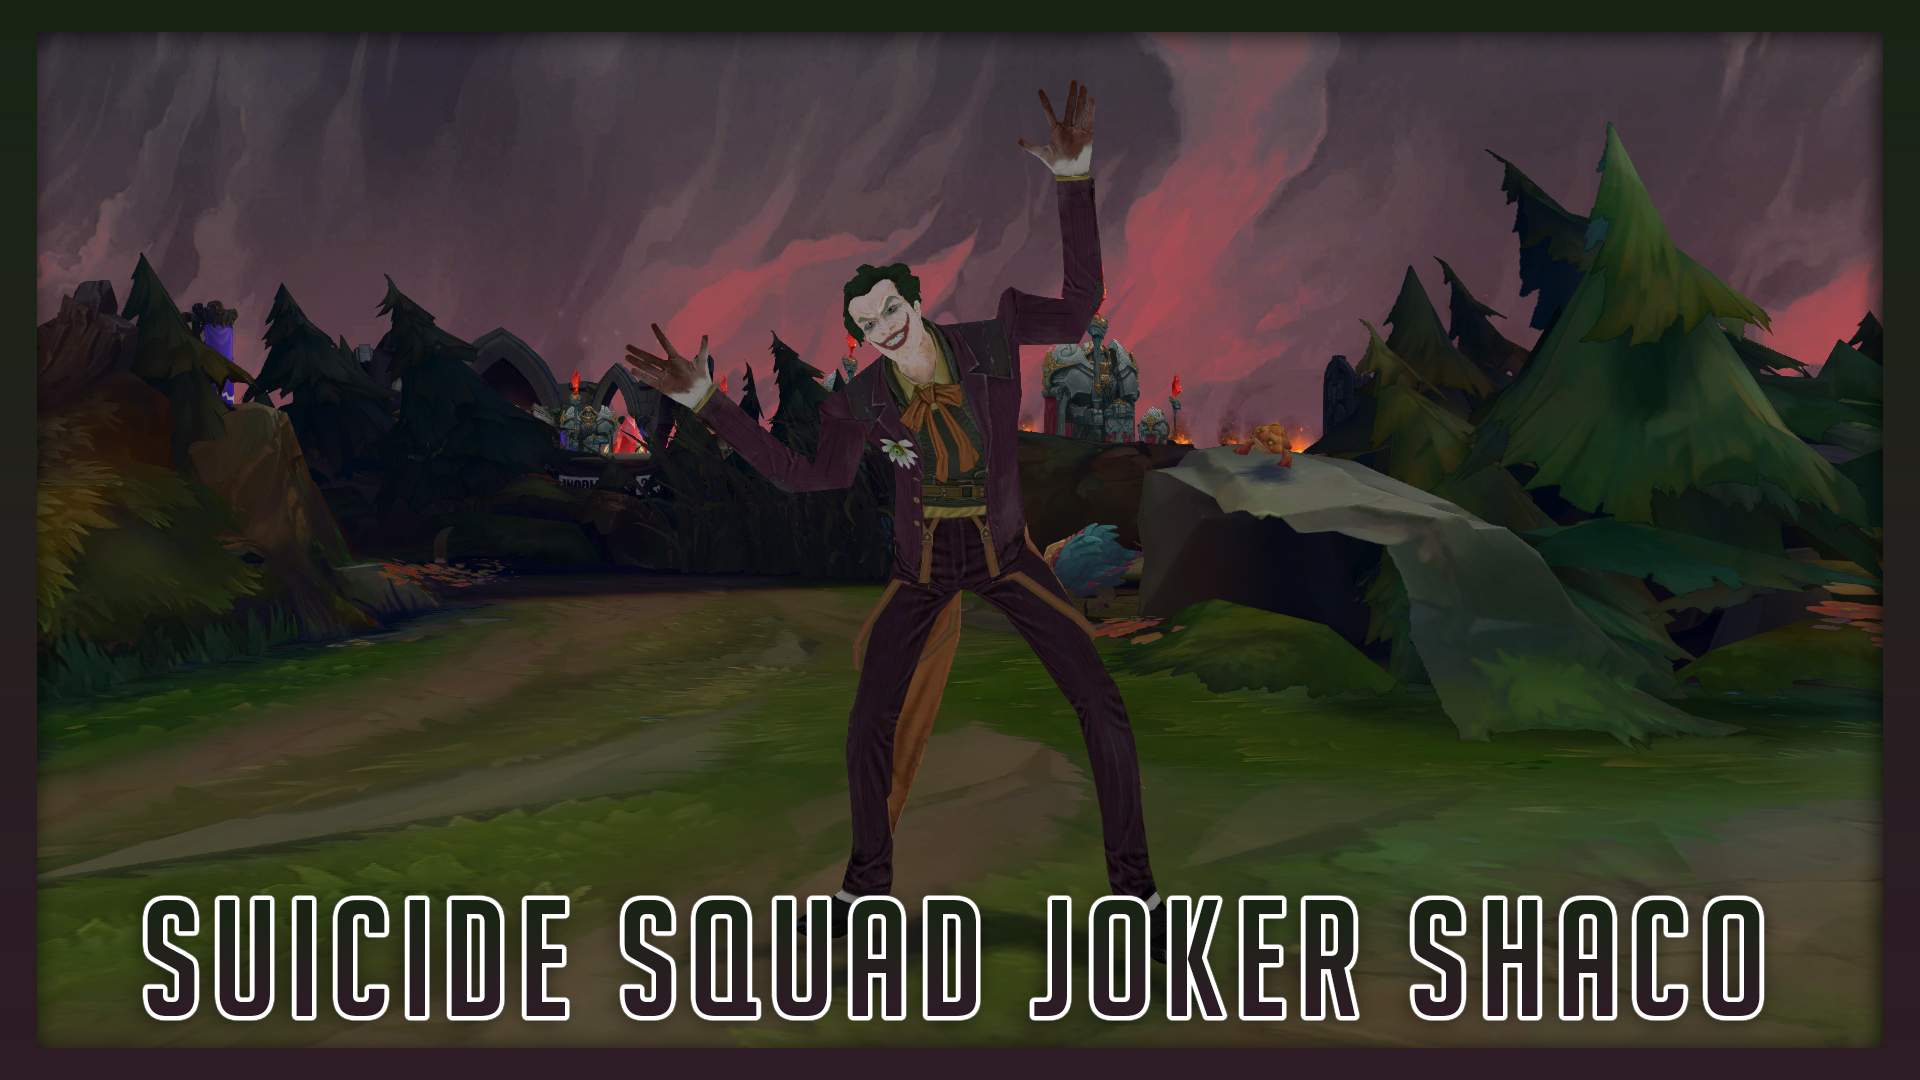 Suicide Squad Joker Shaco